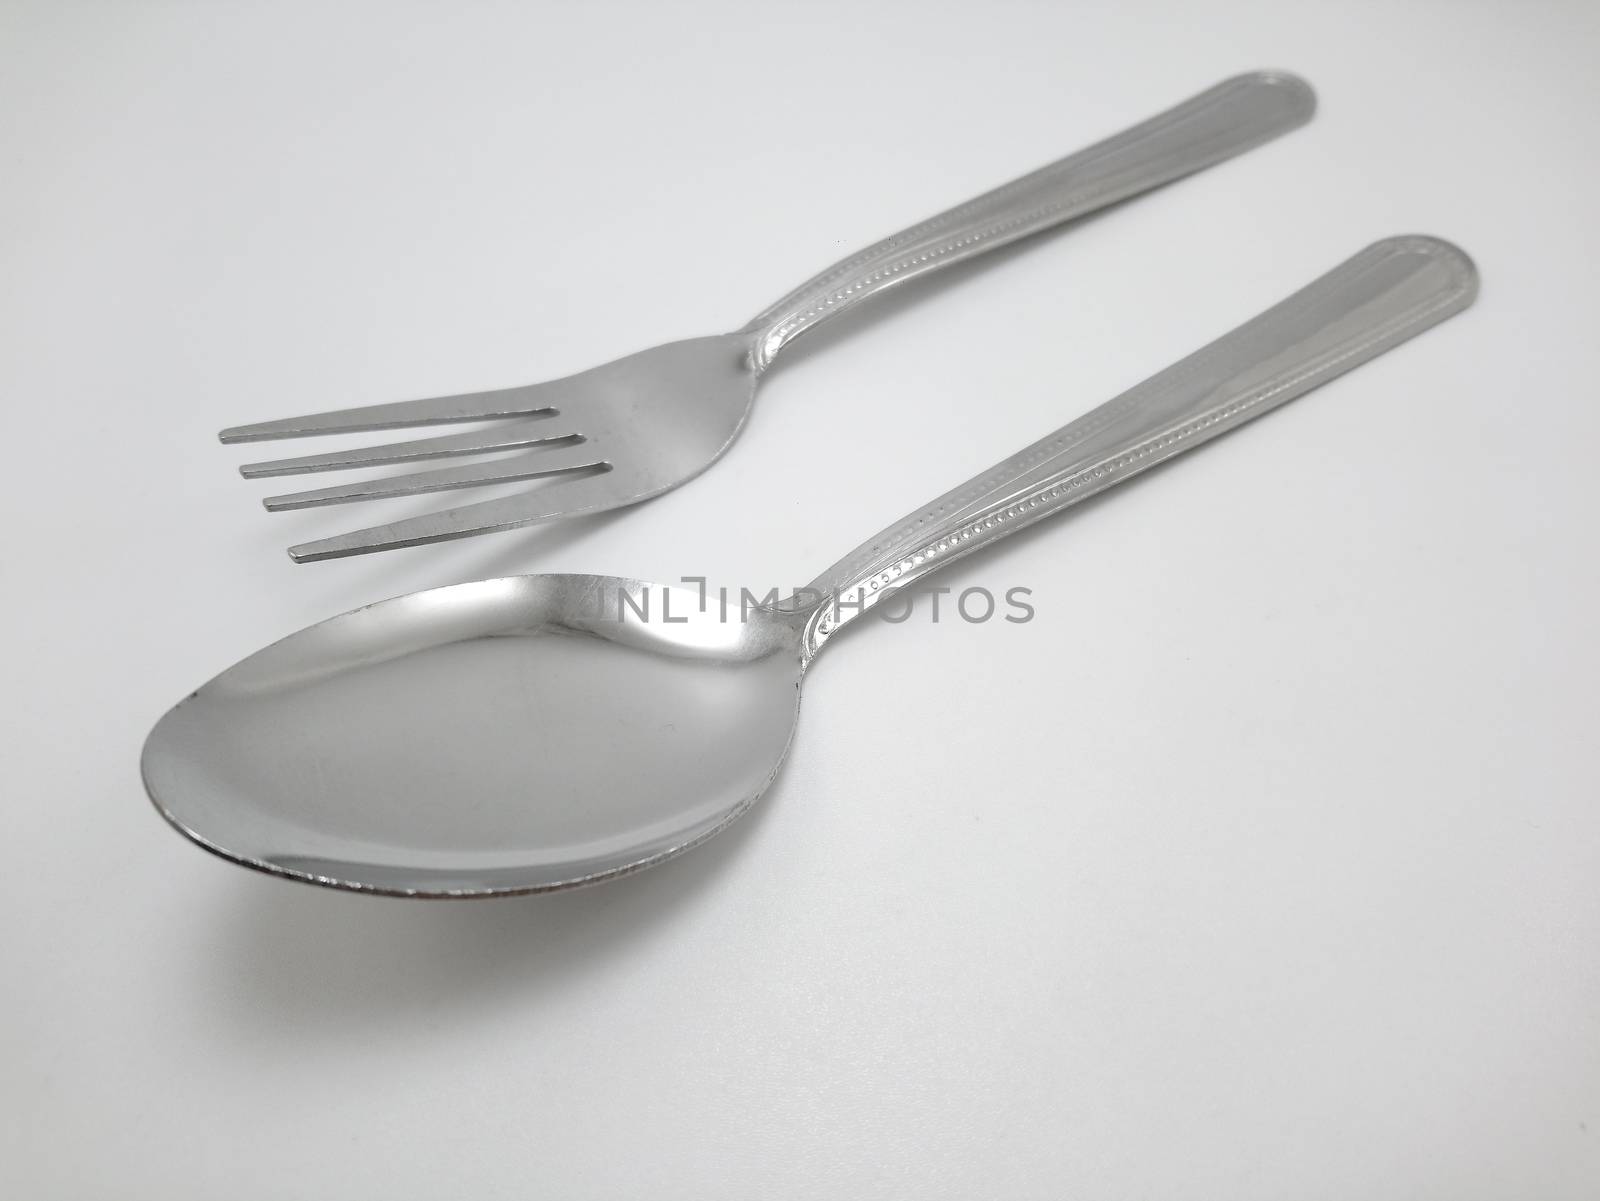 Stainless steel metal spoon and fork eating utensil  by imwaltersy